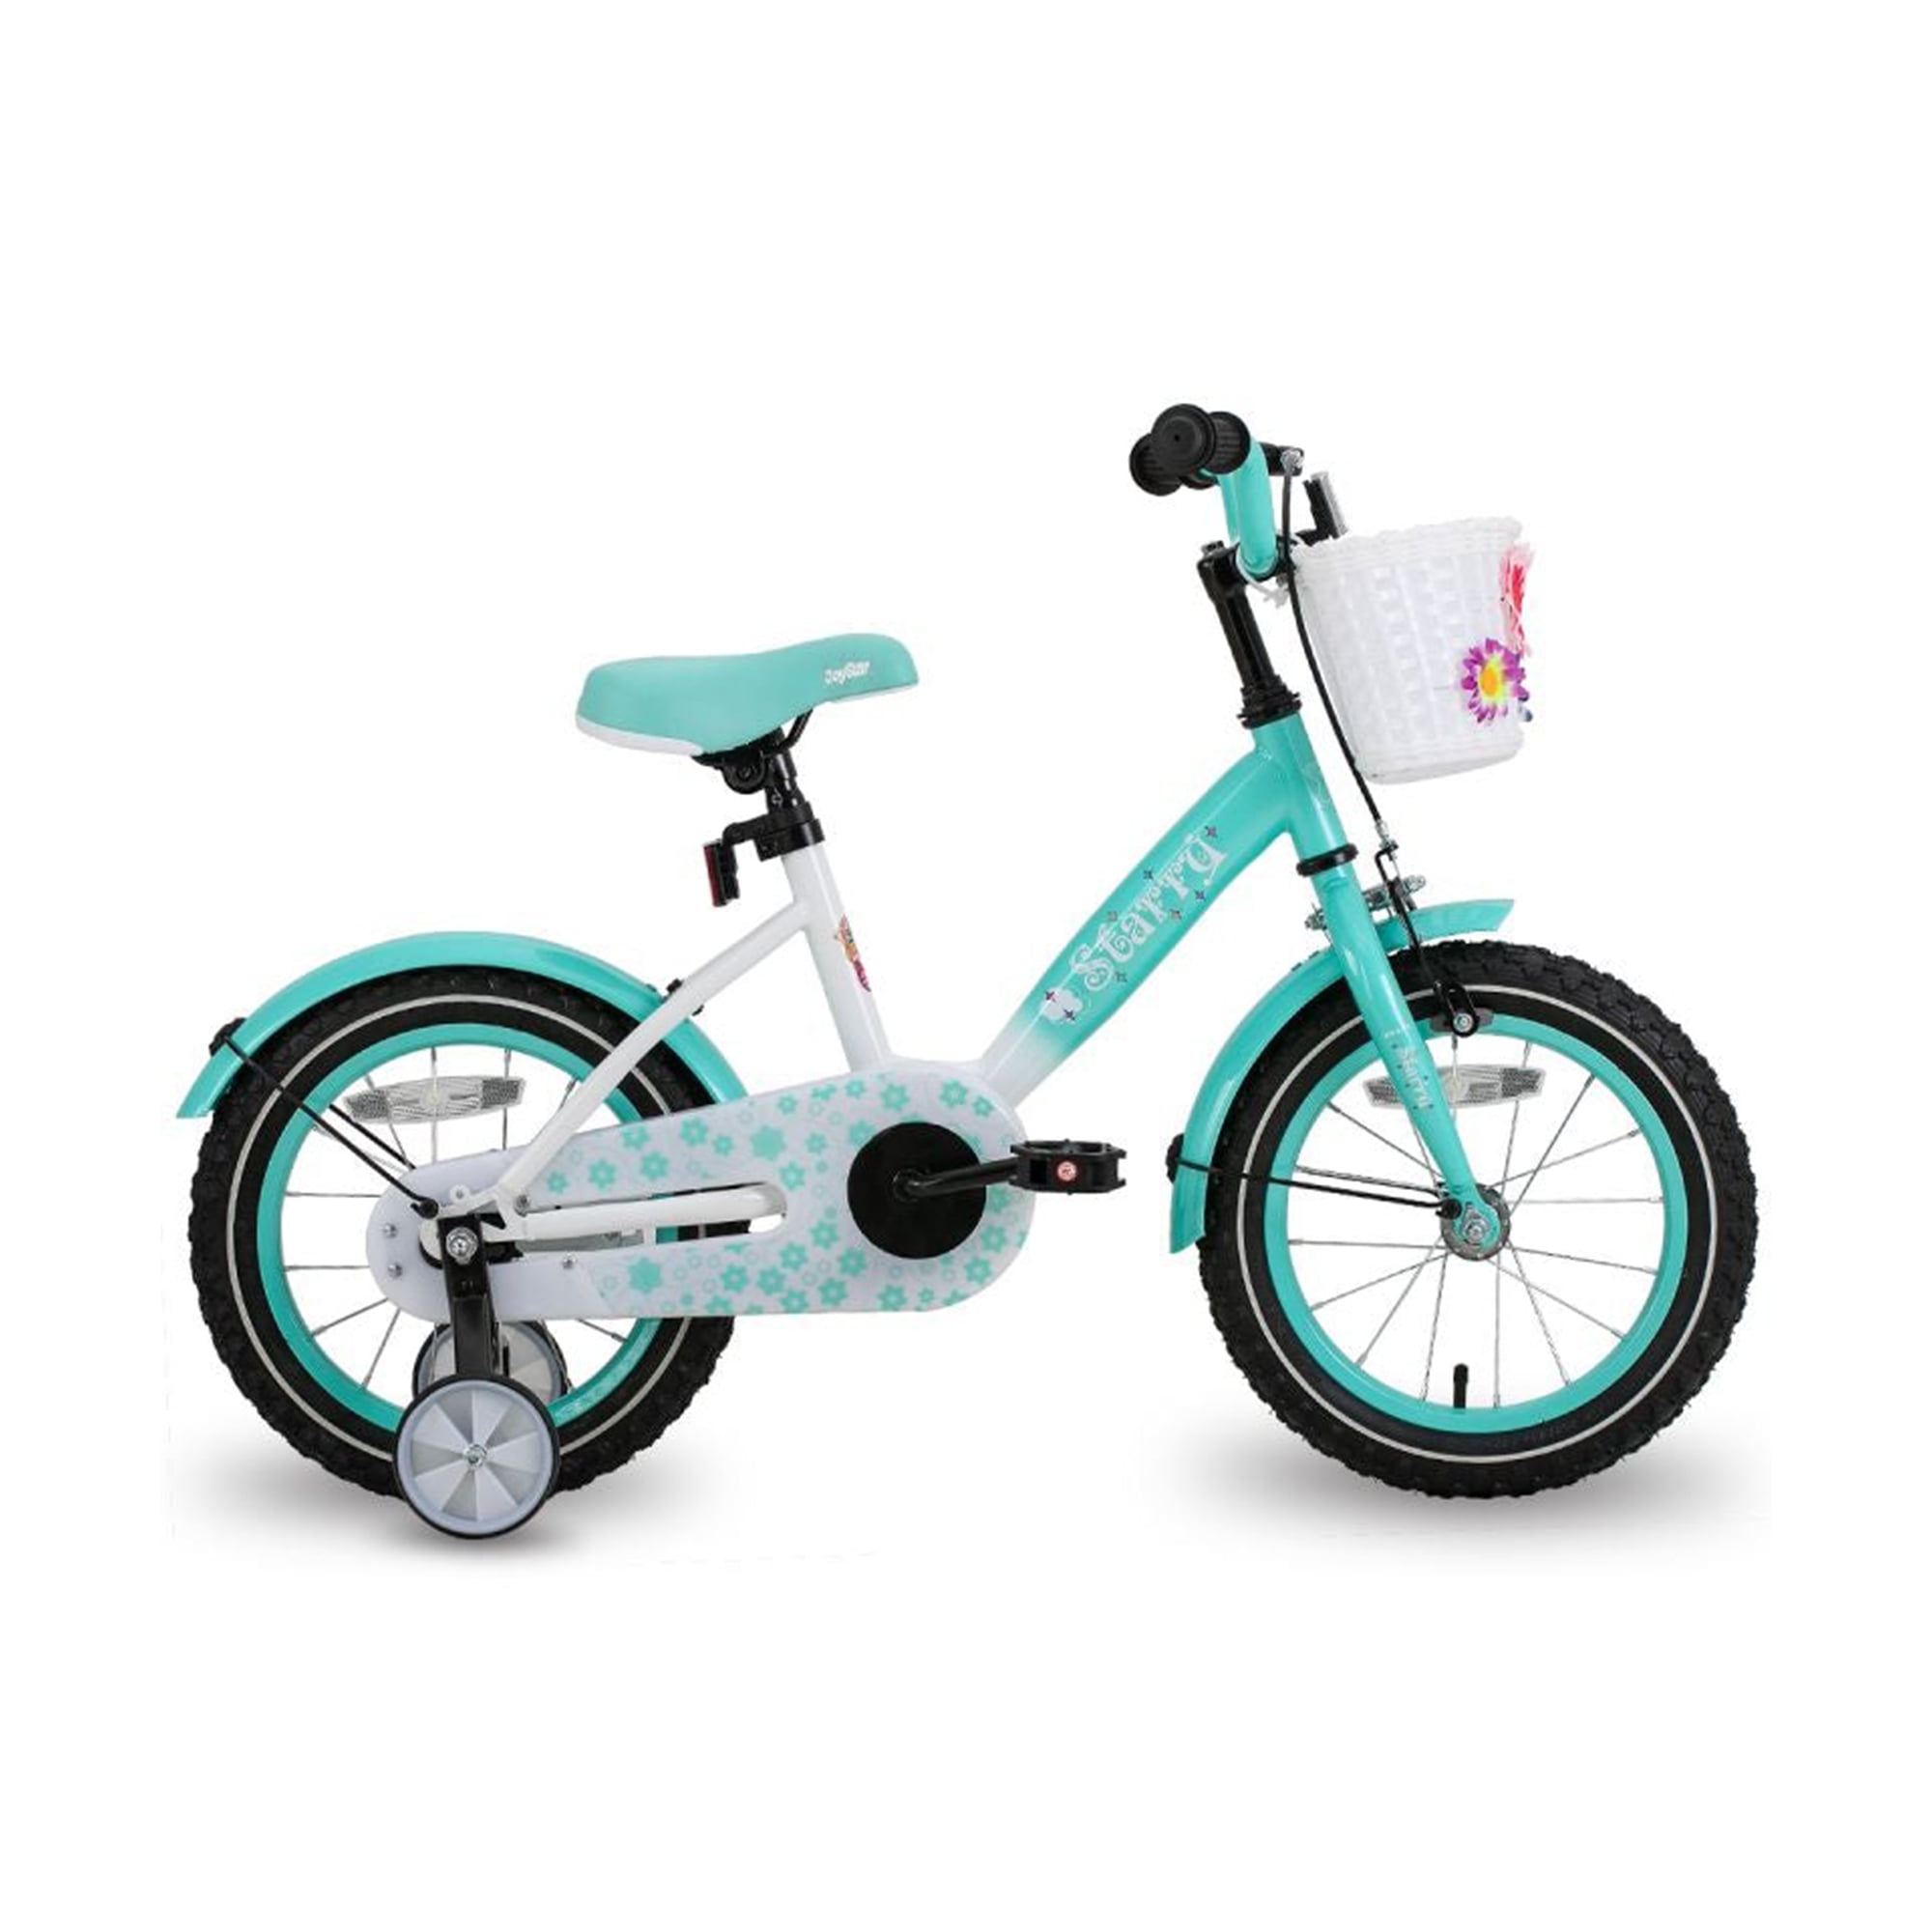 JOYSTAR 16 Inch Starry Girls Bike for 4-7 Year Old Kids, Lavender